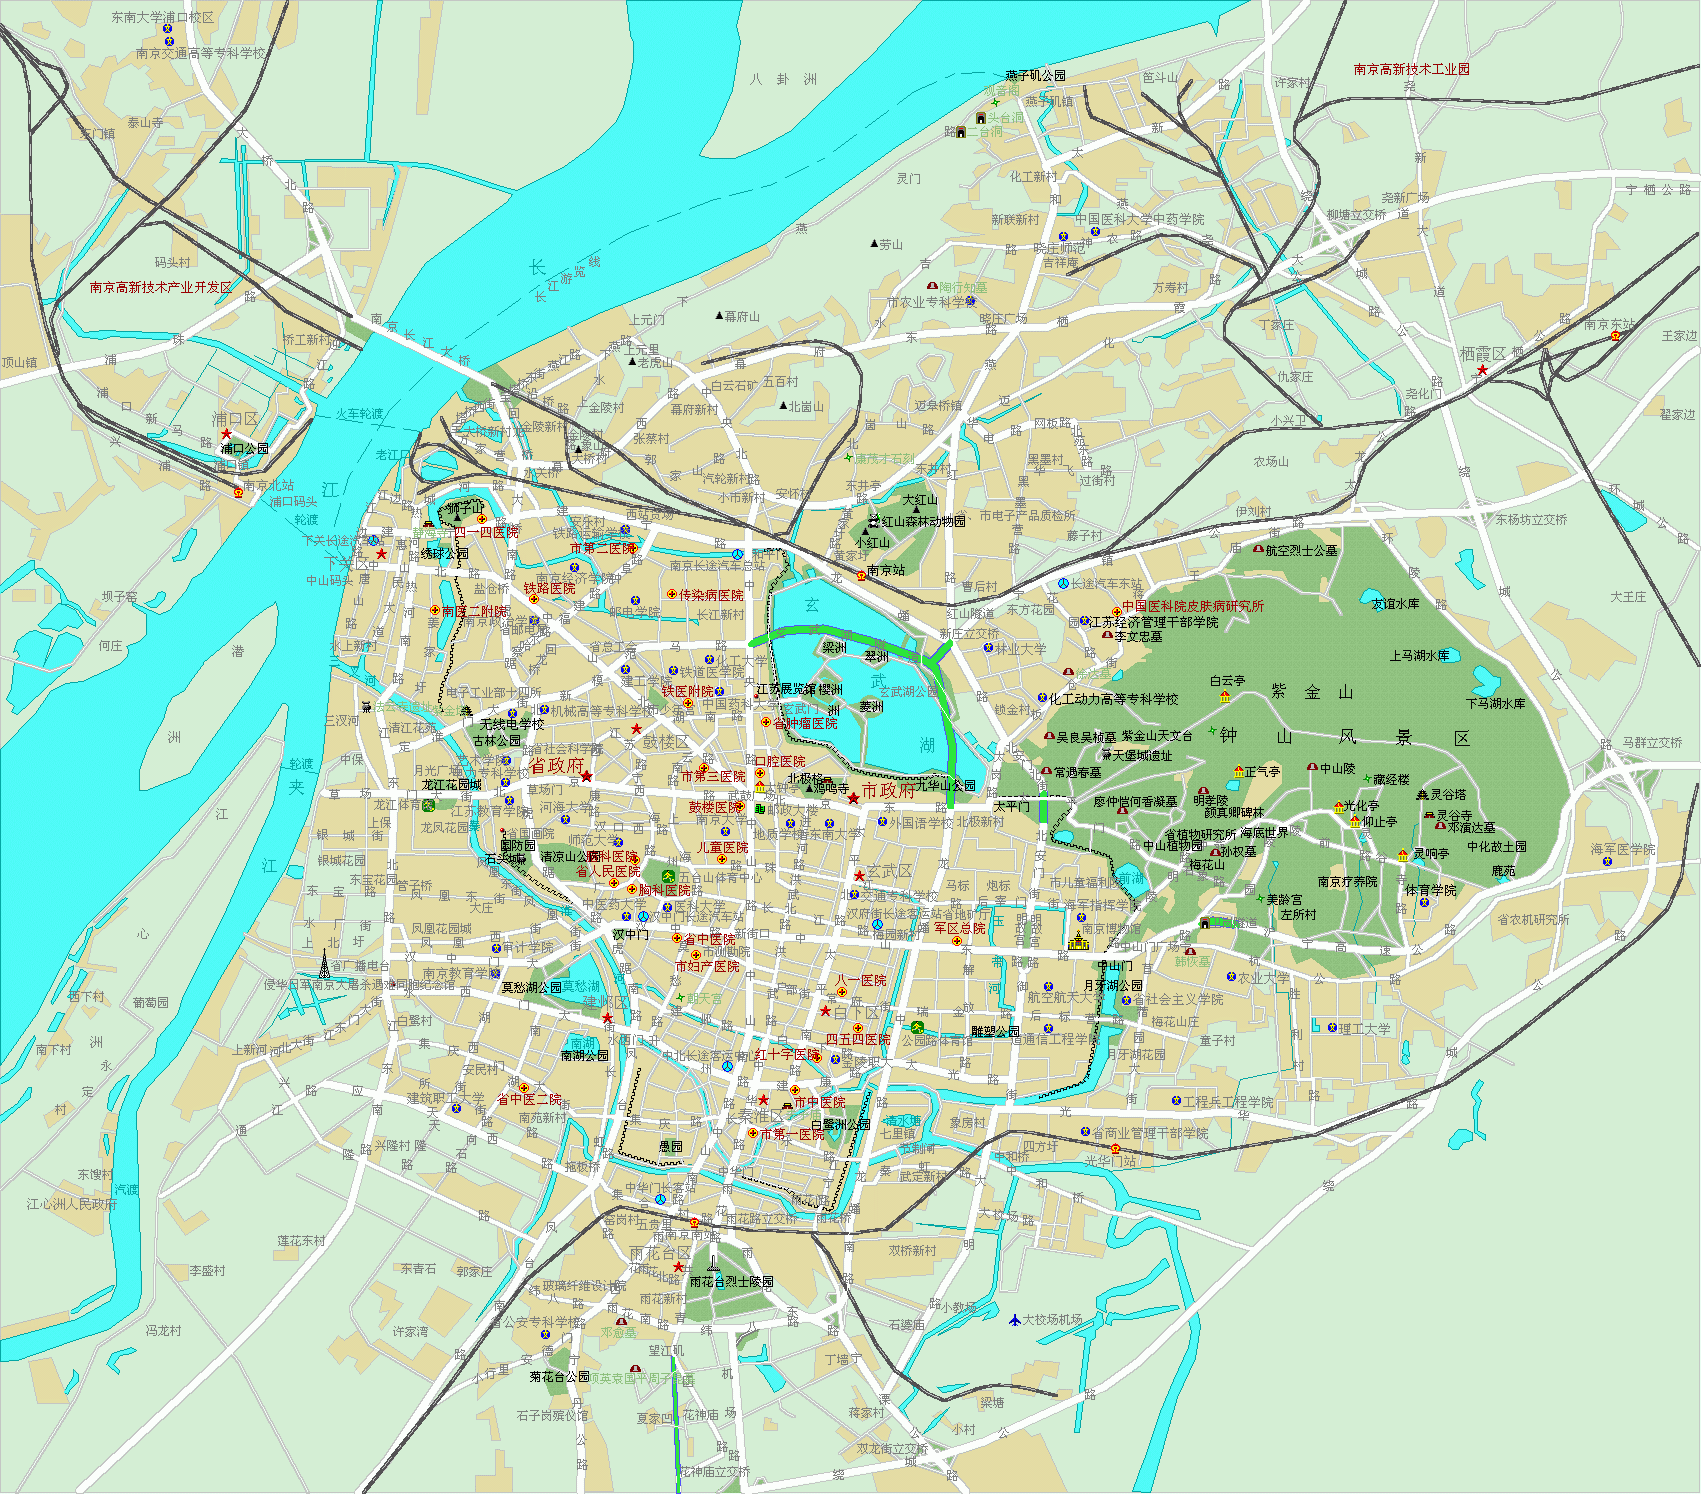 nanjing city center map